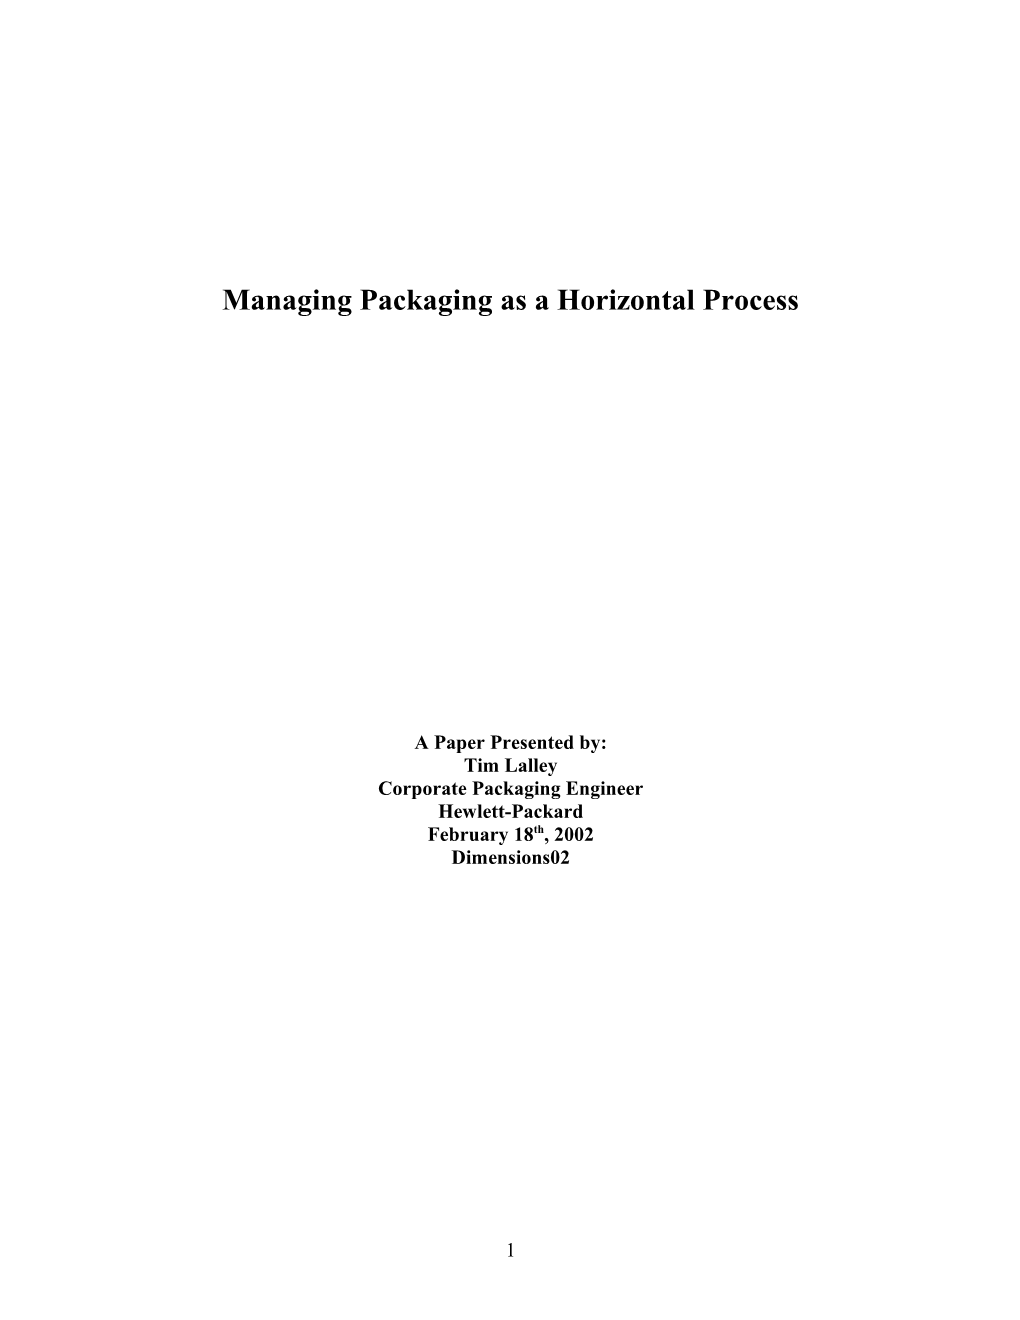 Managing Packaging As a Horizontal Process